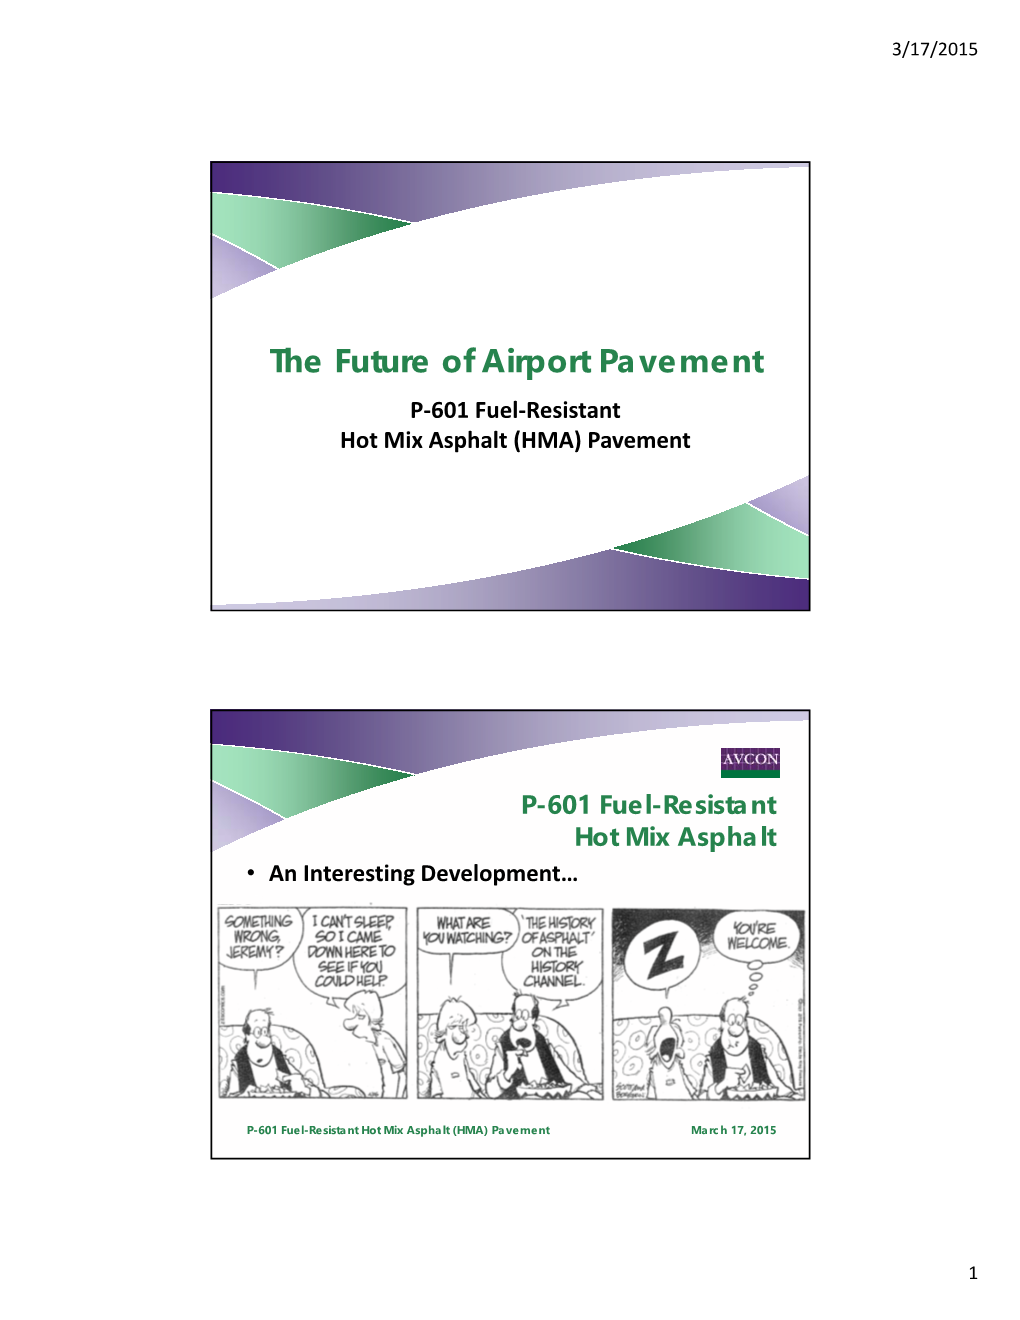 The Future of Airport Pavement P-601 Fuel-Resistant Hot Mix Asphalt